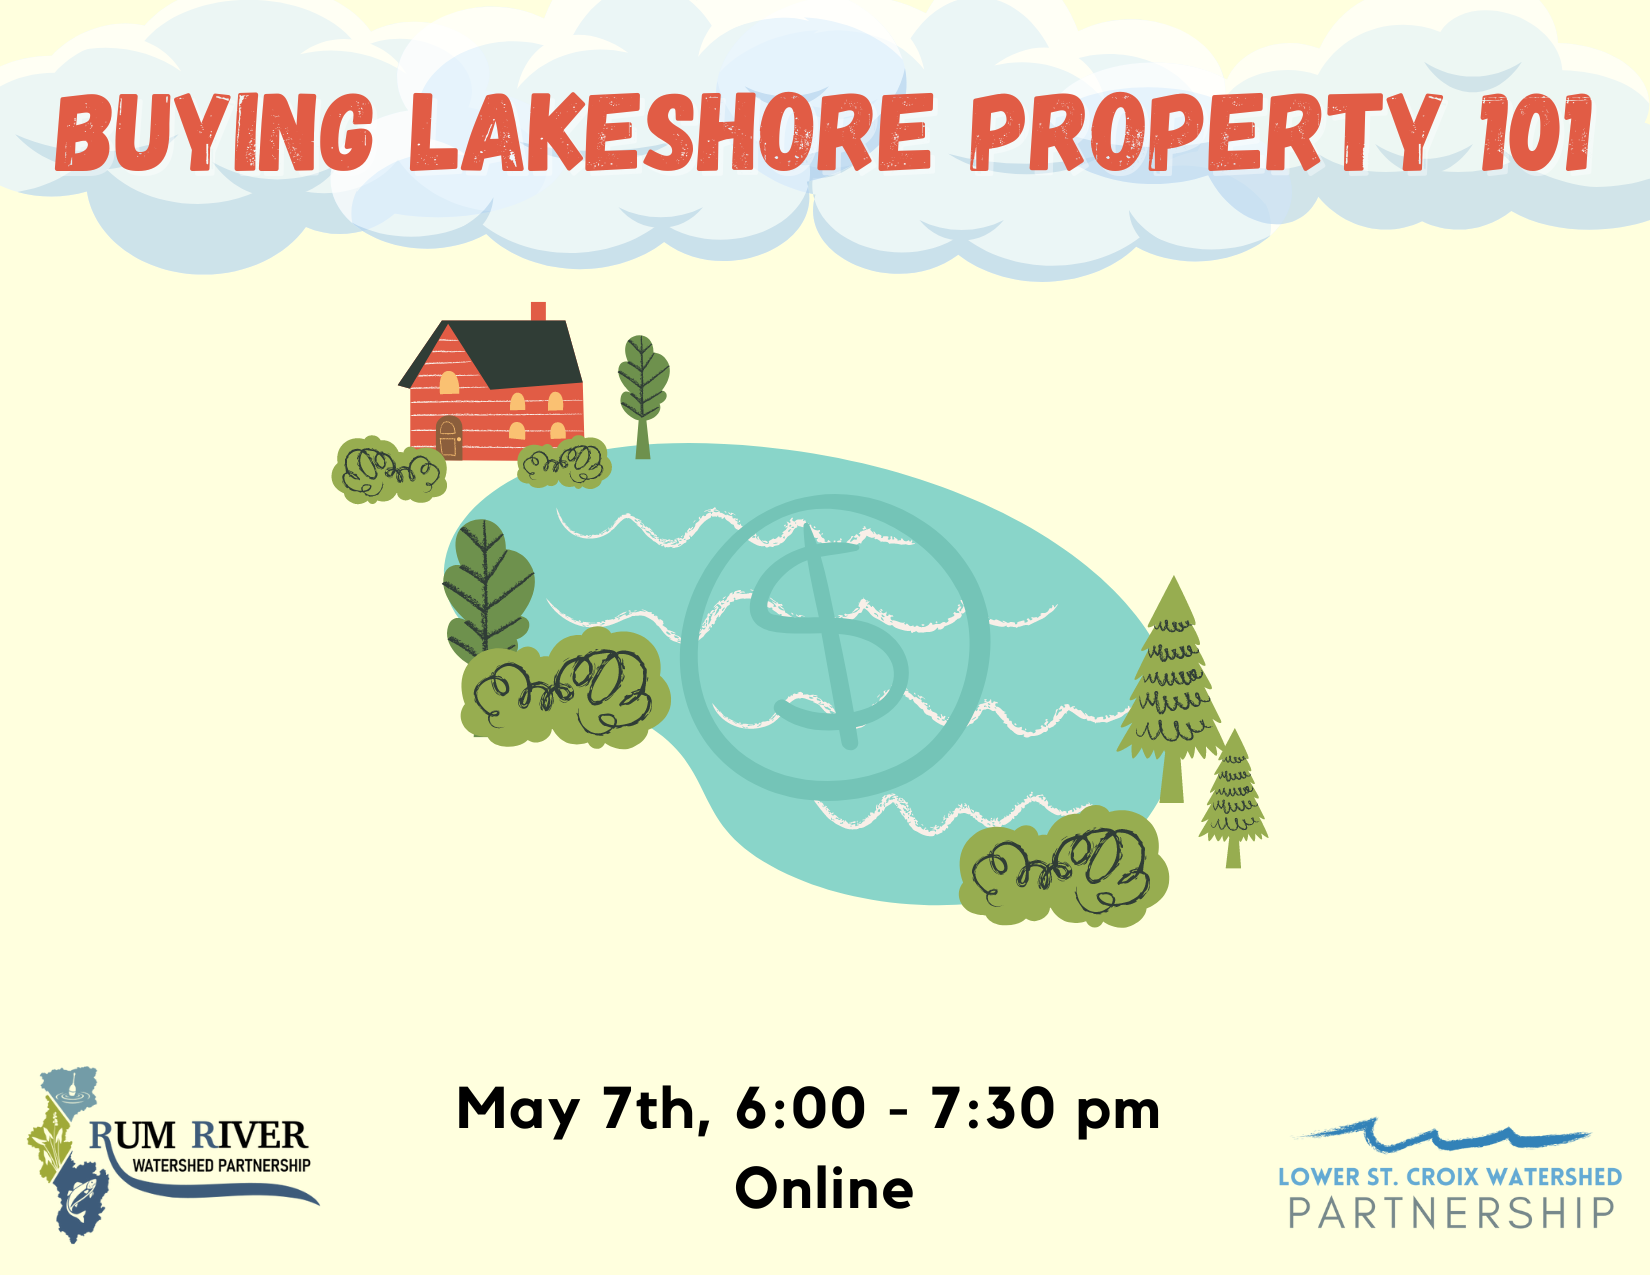 Buying lakeshore property 101 May 7